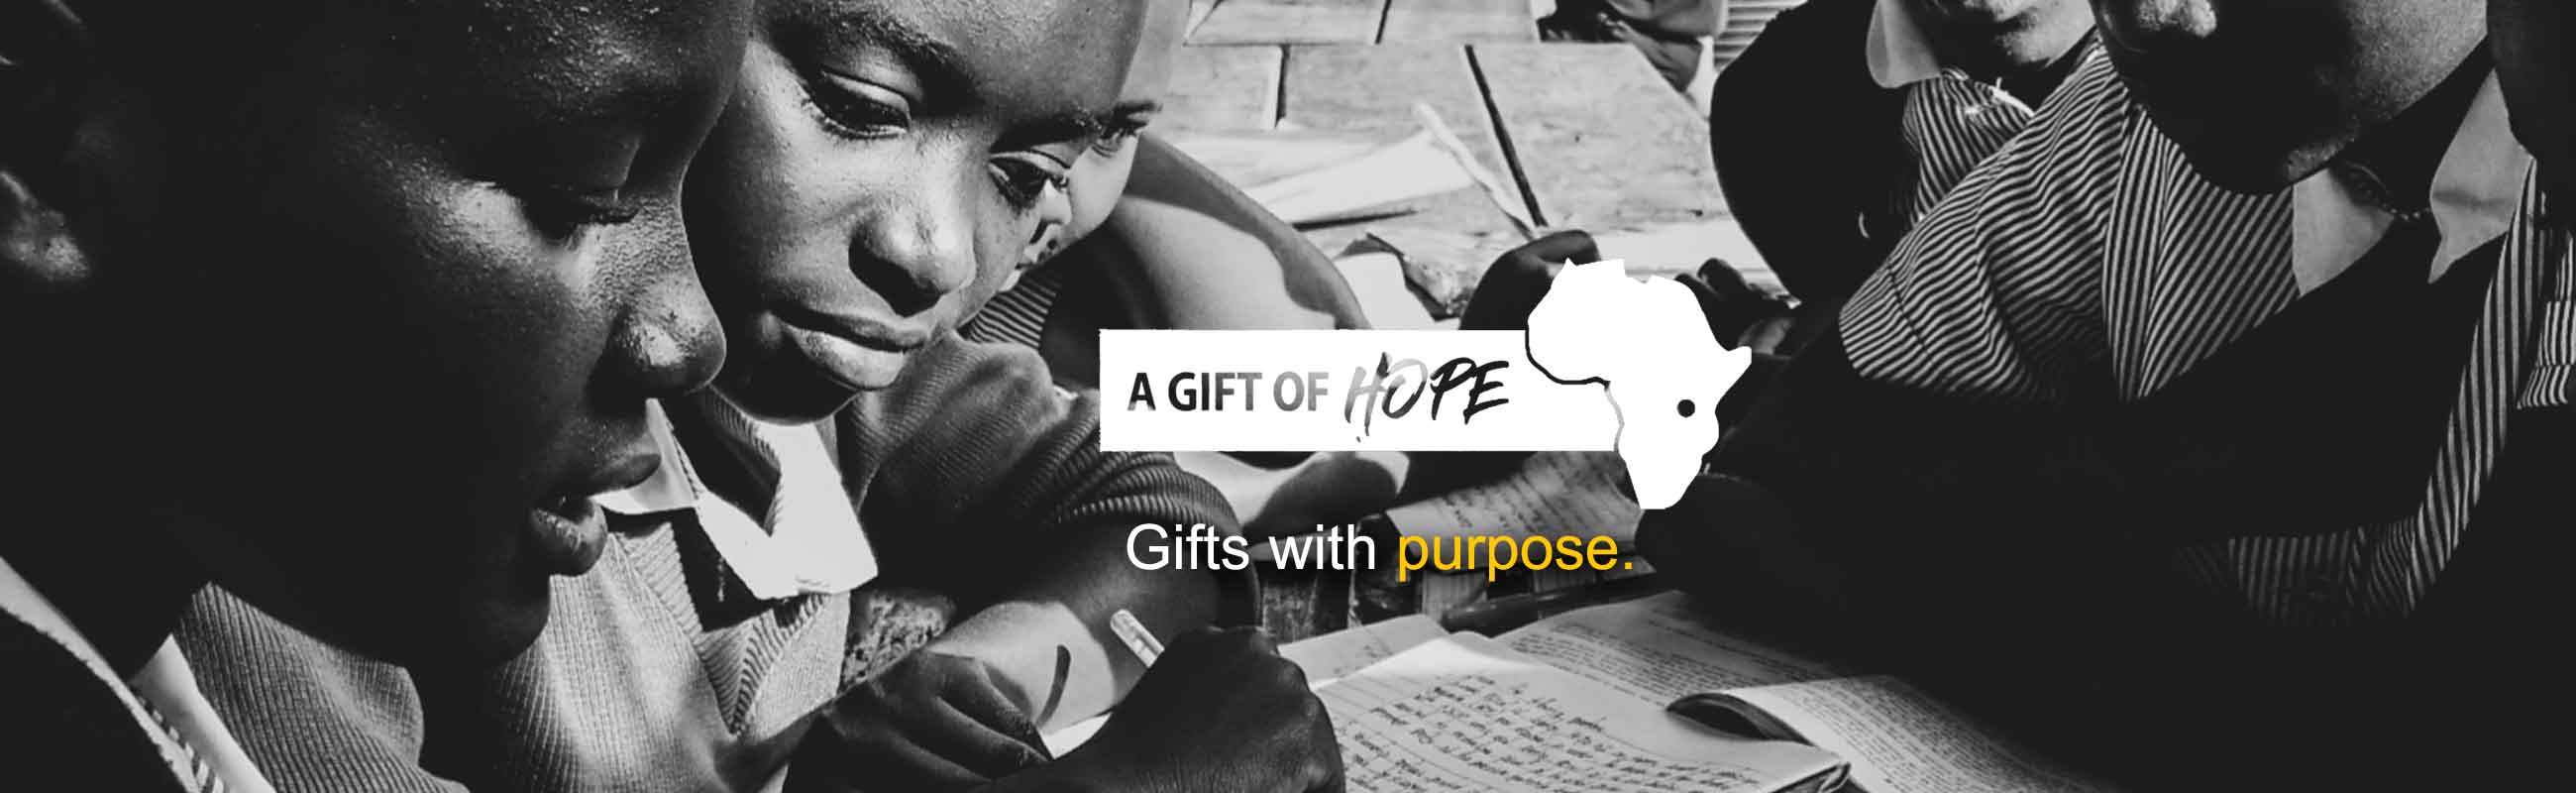 Gift-of-hope-web-banner-4